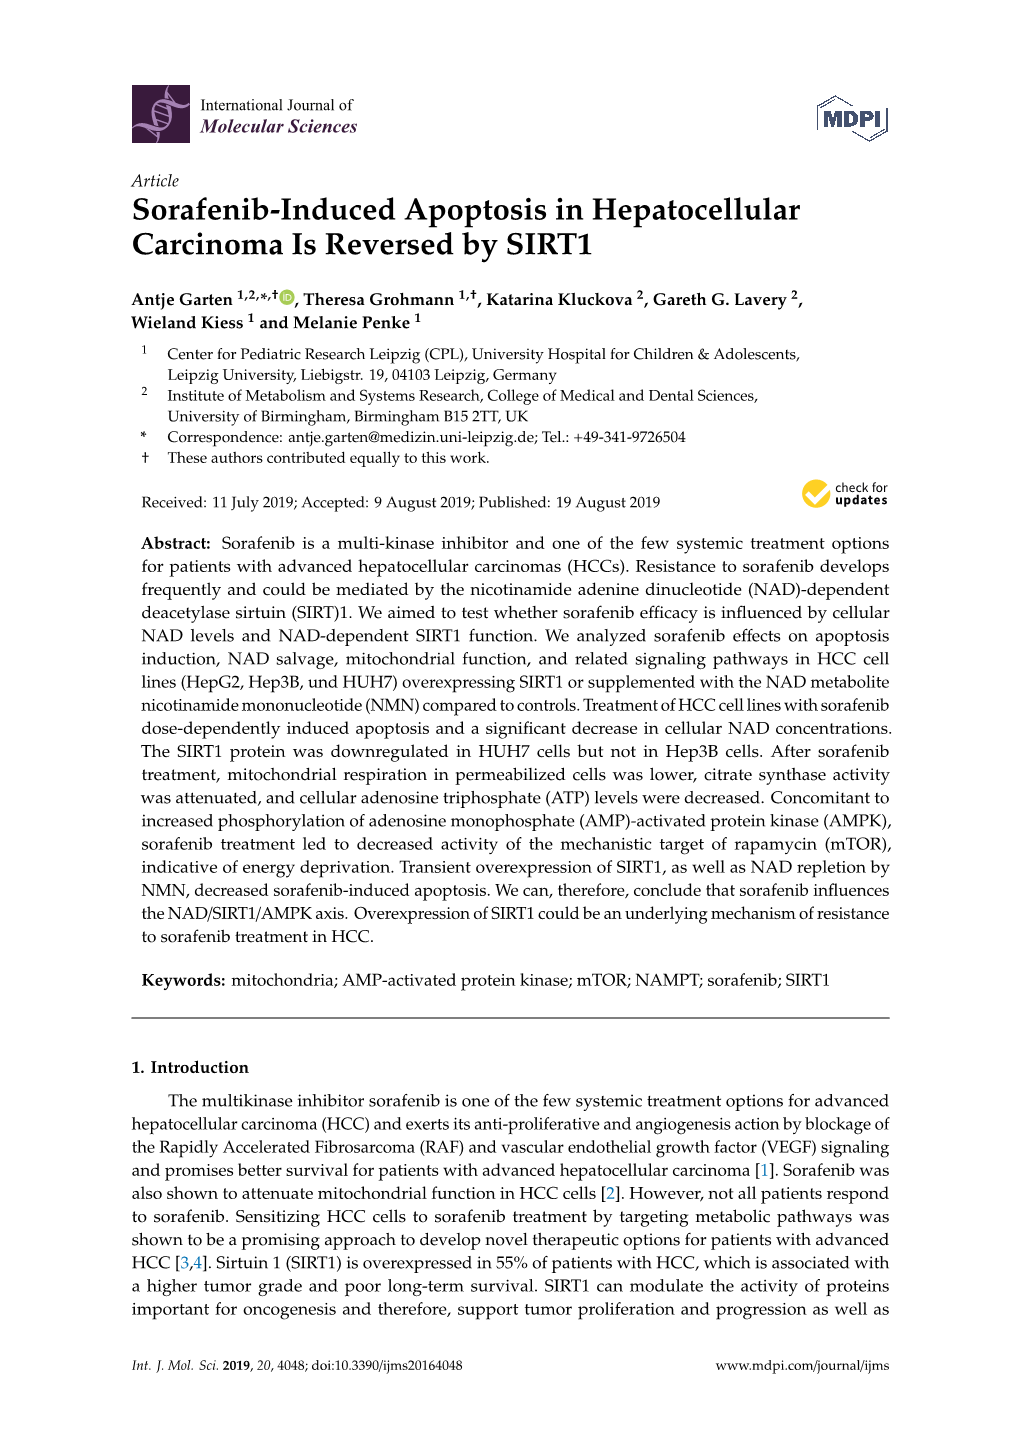 Sorafenib-Induced Apoptosis in Hepatocellular Carcinoma Is Reversed by SIRT1